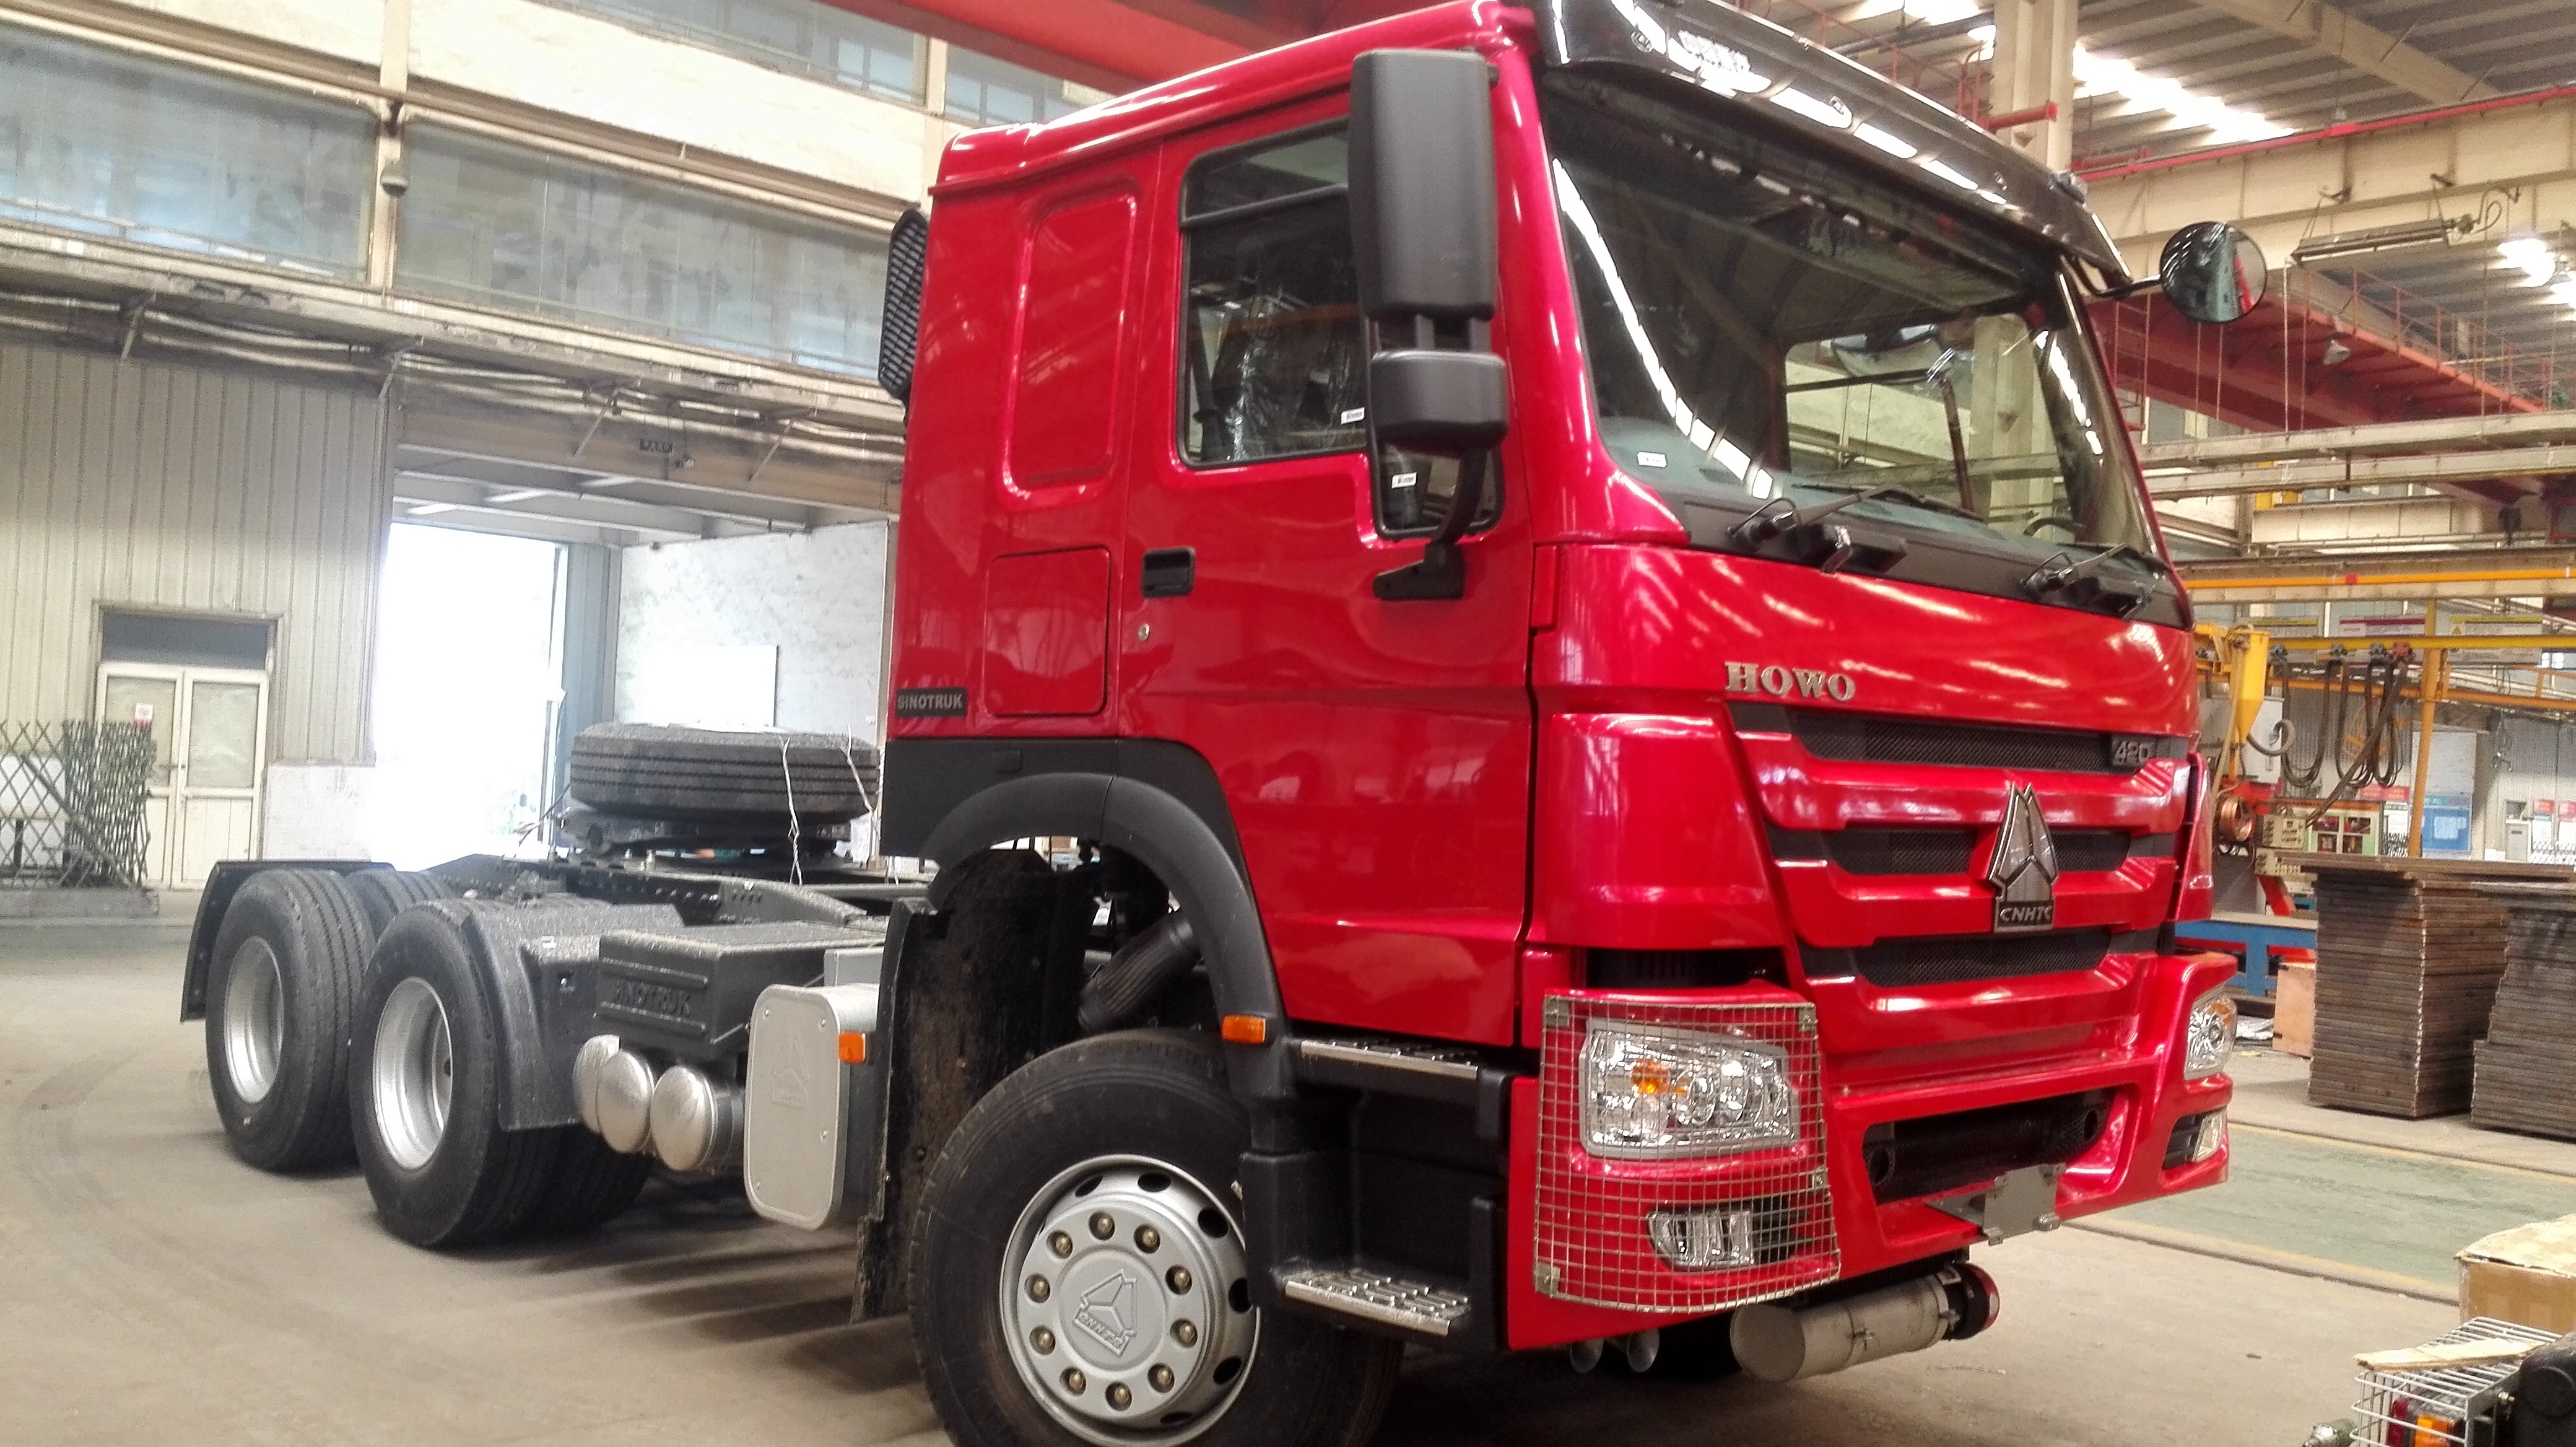 Deliver 2units 33,000L fuel tanker plus HOWO tractors to Malawi